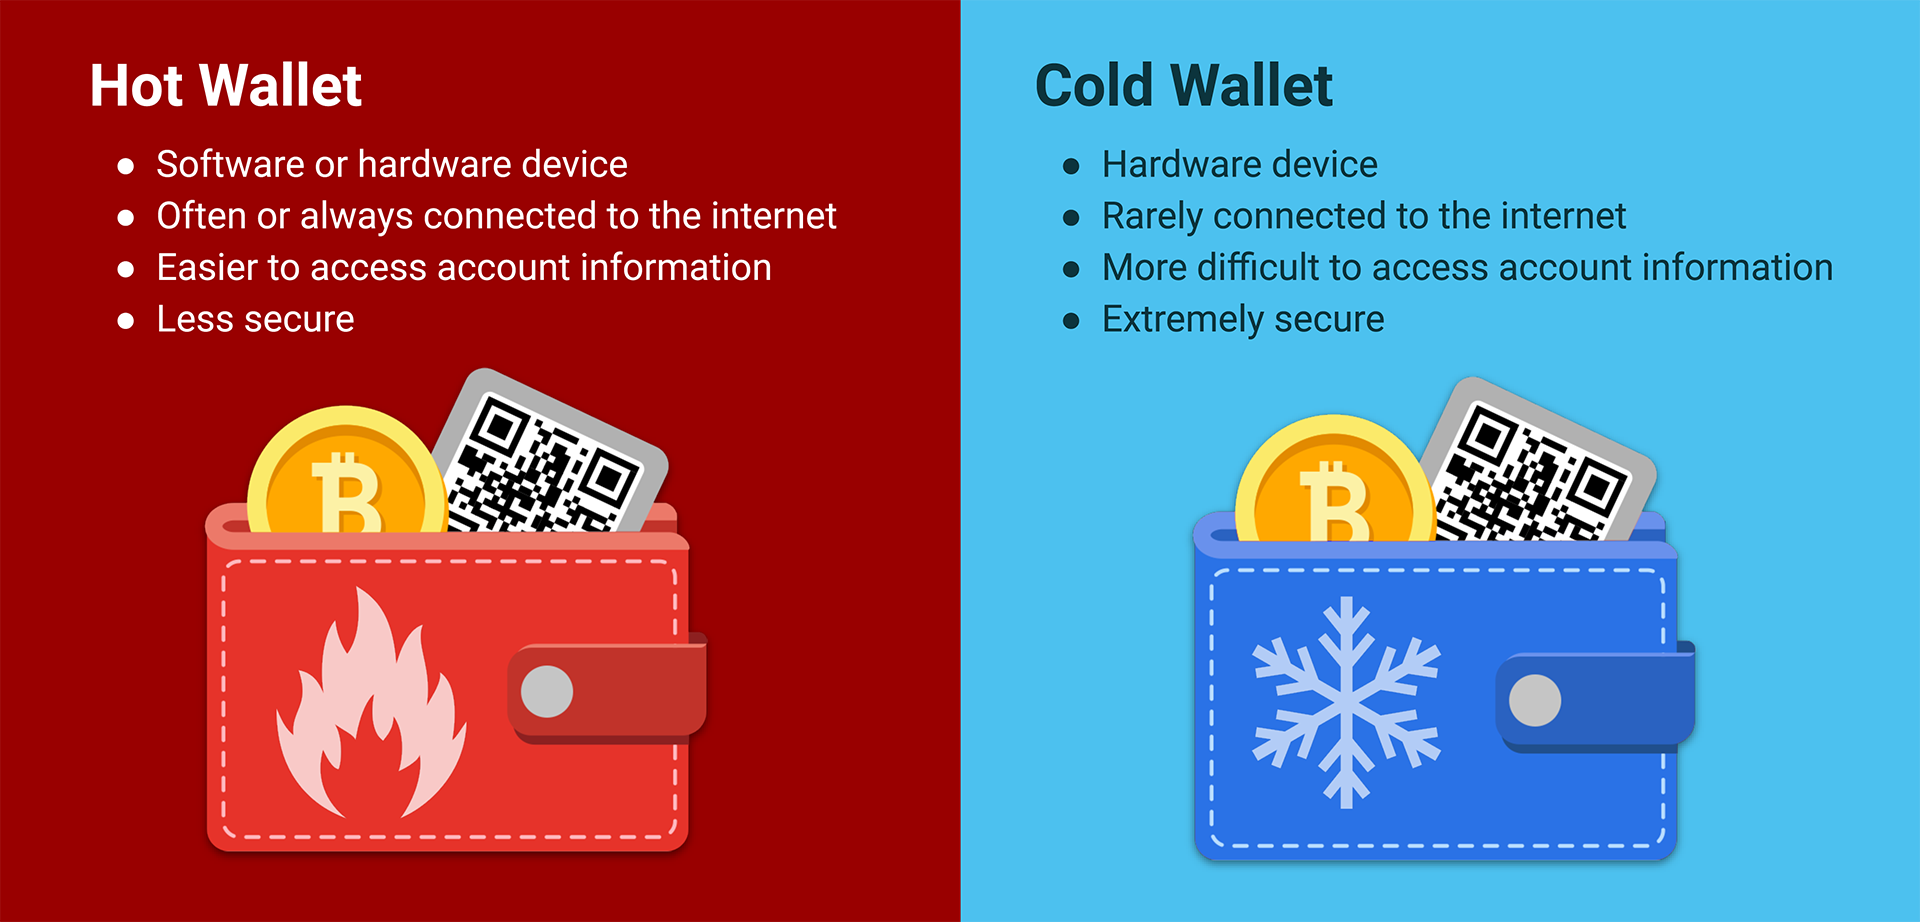 Hot Wallet vs. Cold Wallet